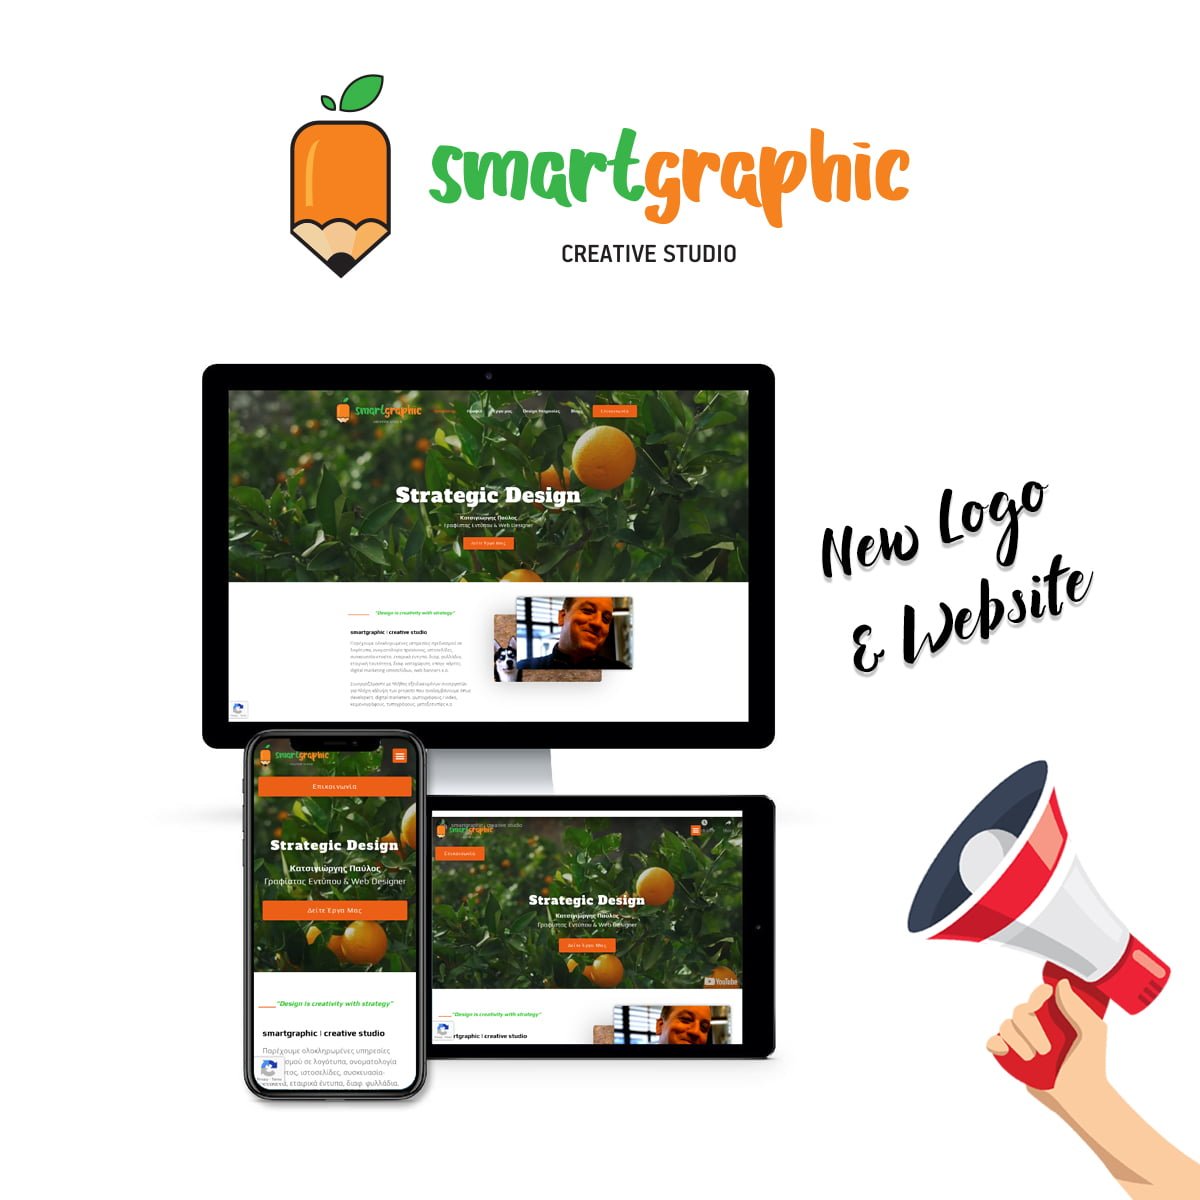 smartgraphic new website 2